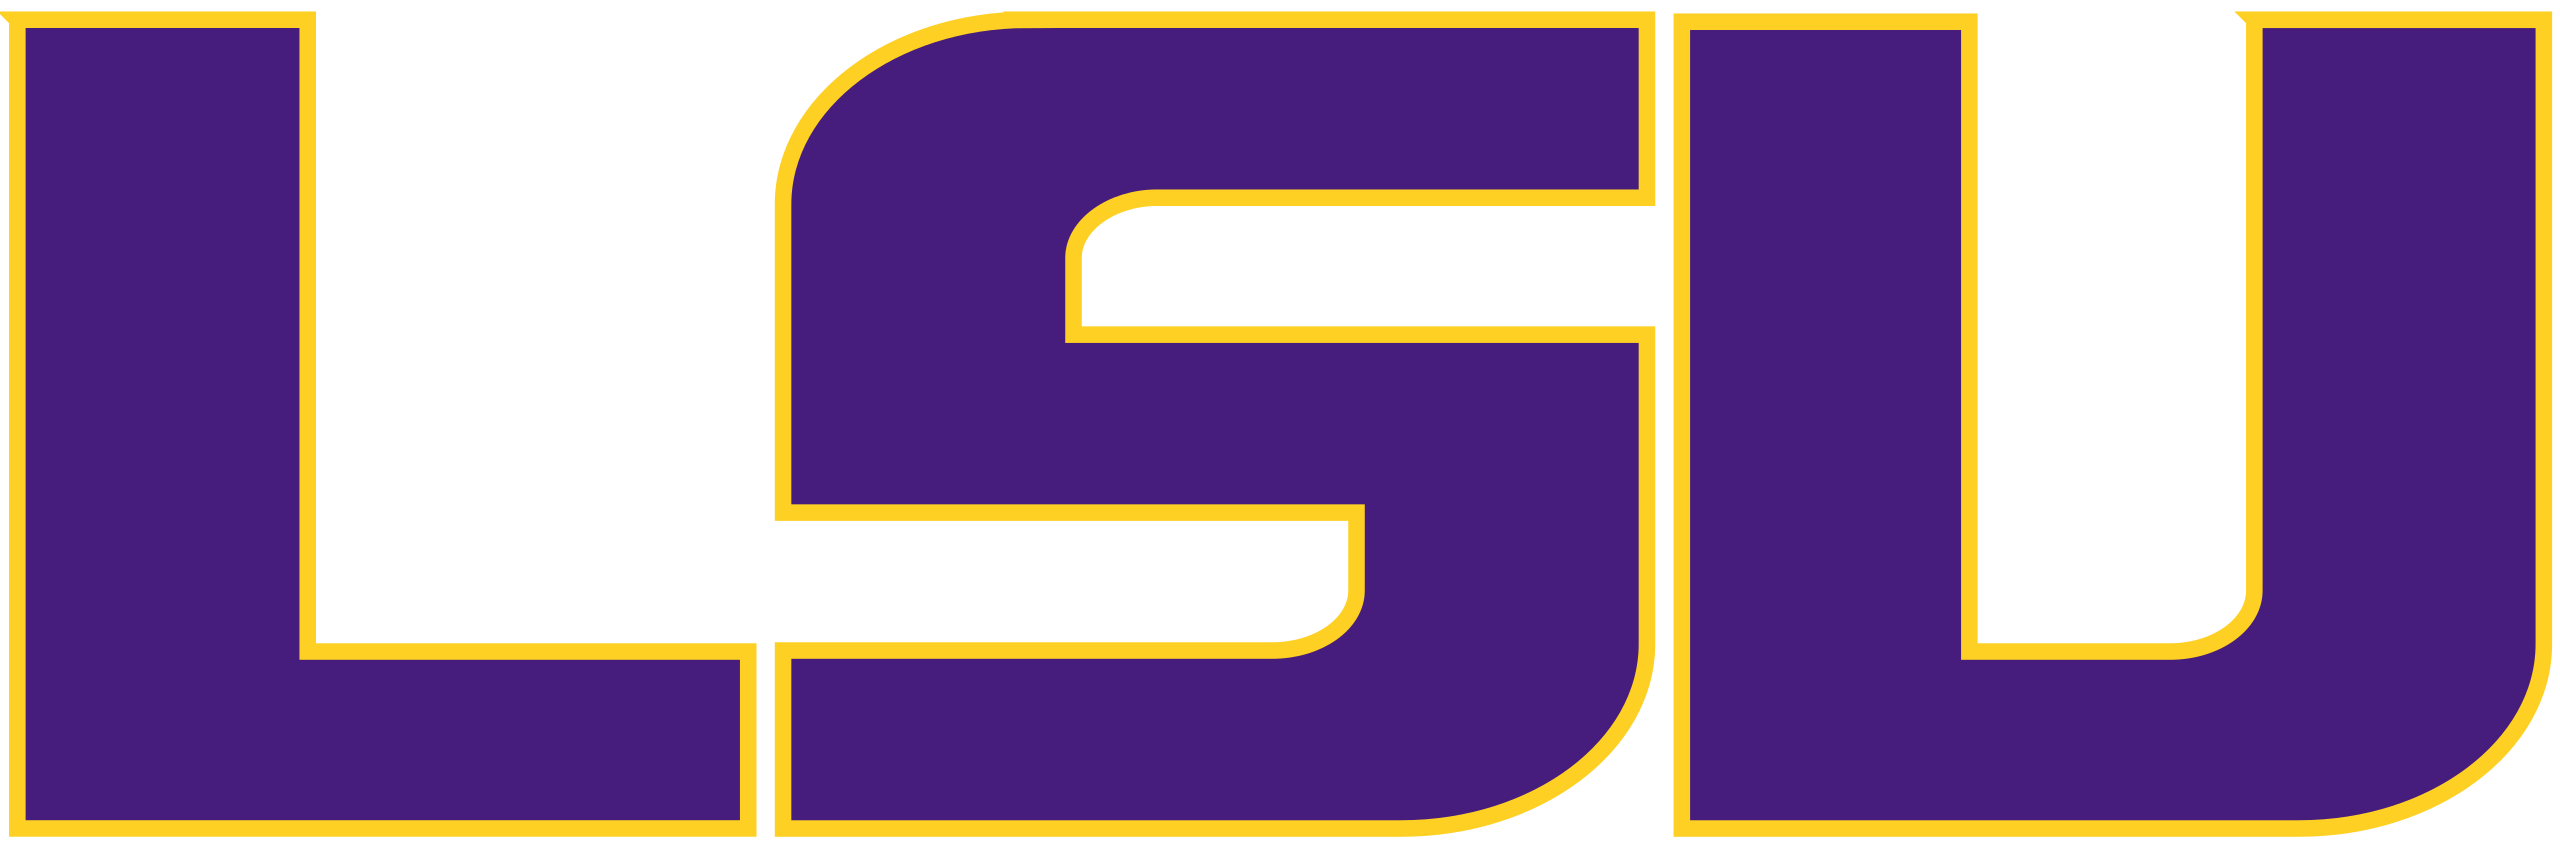 LSU_Athletics_logo.svg